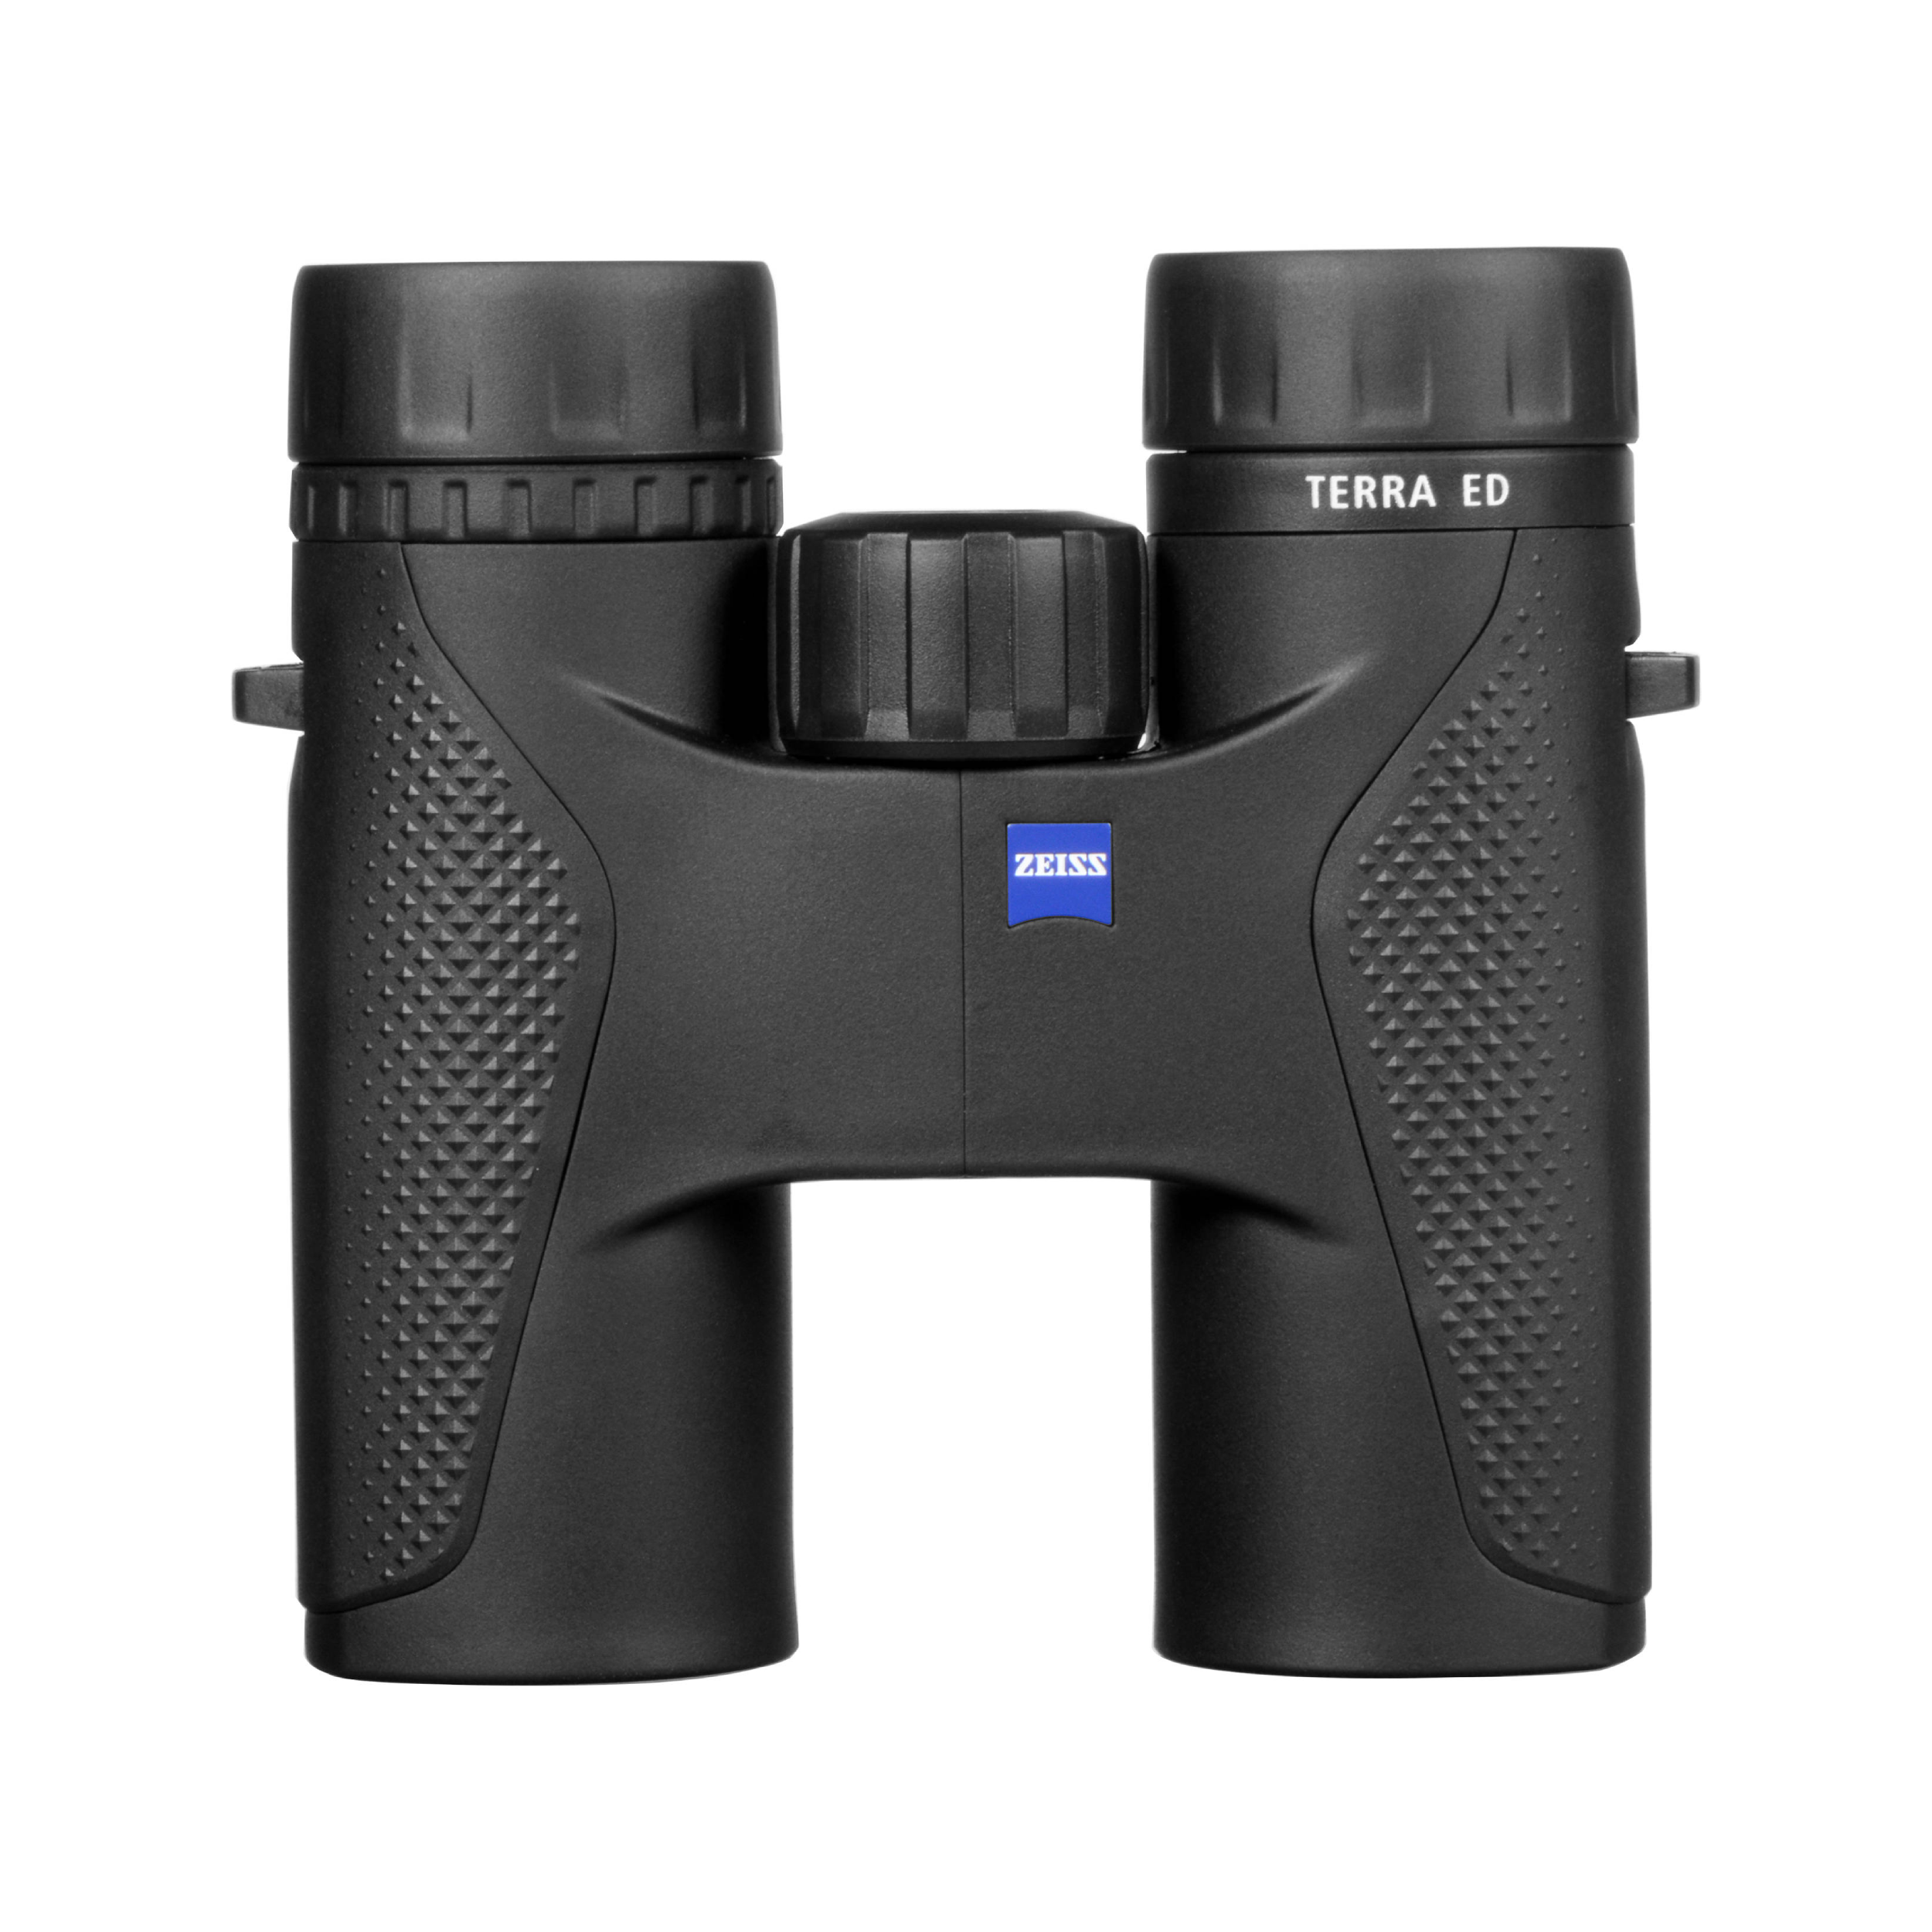 ZEISS Terra ED Binoculars -  8x32 - Black